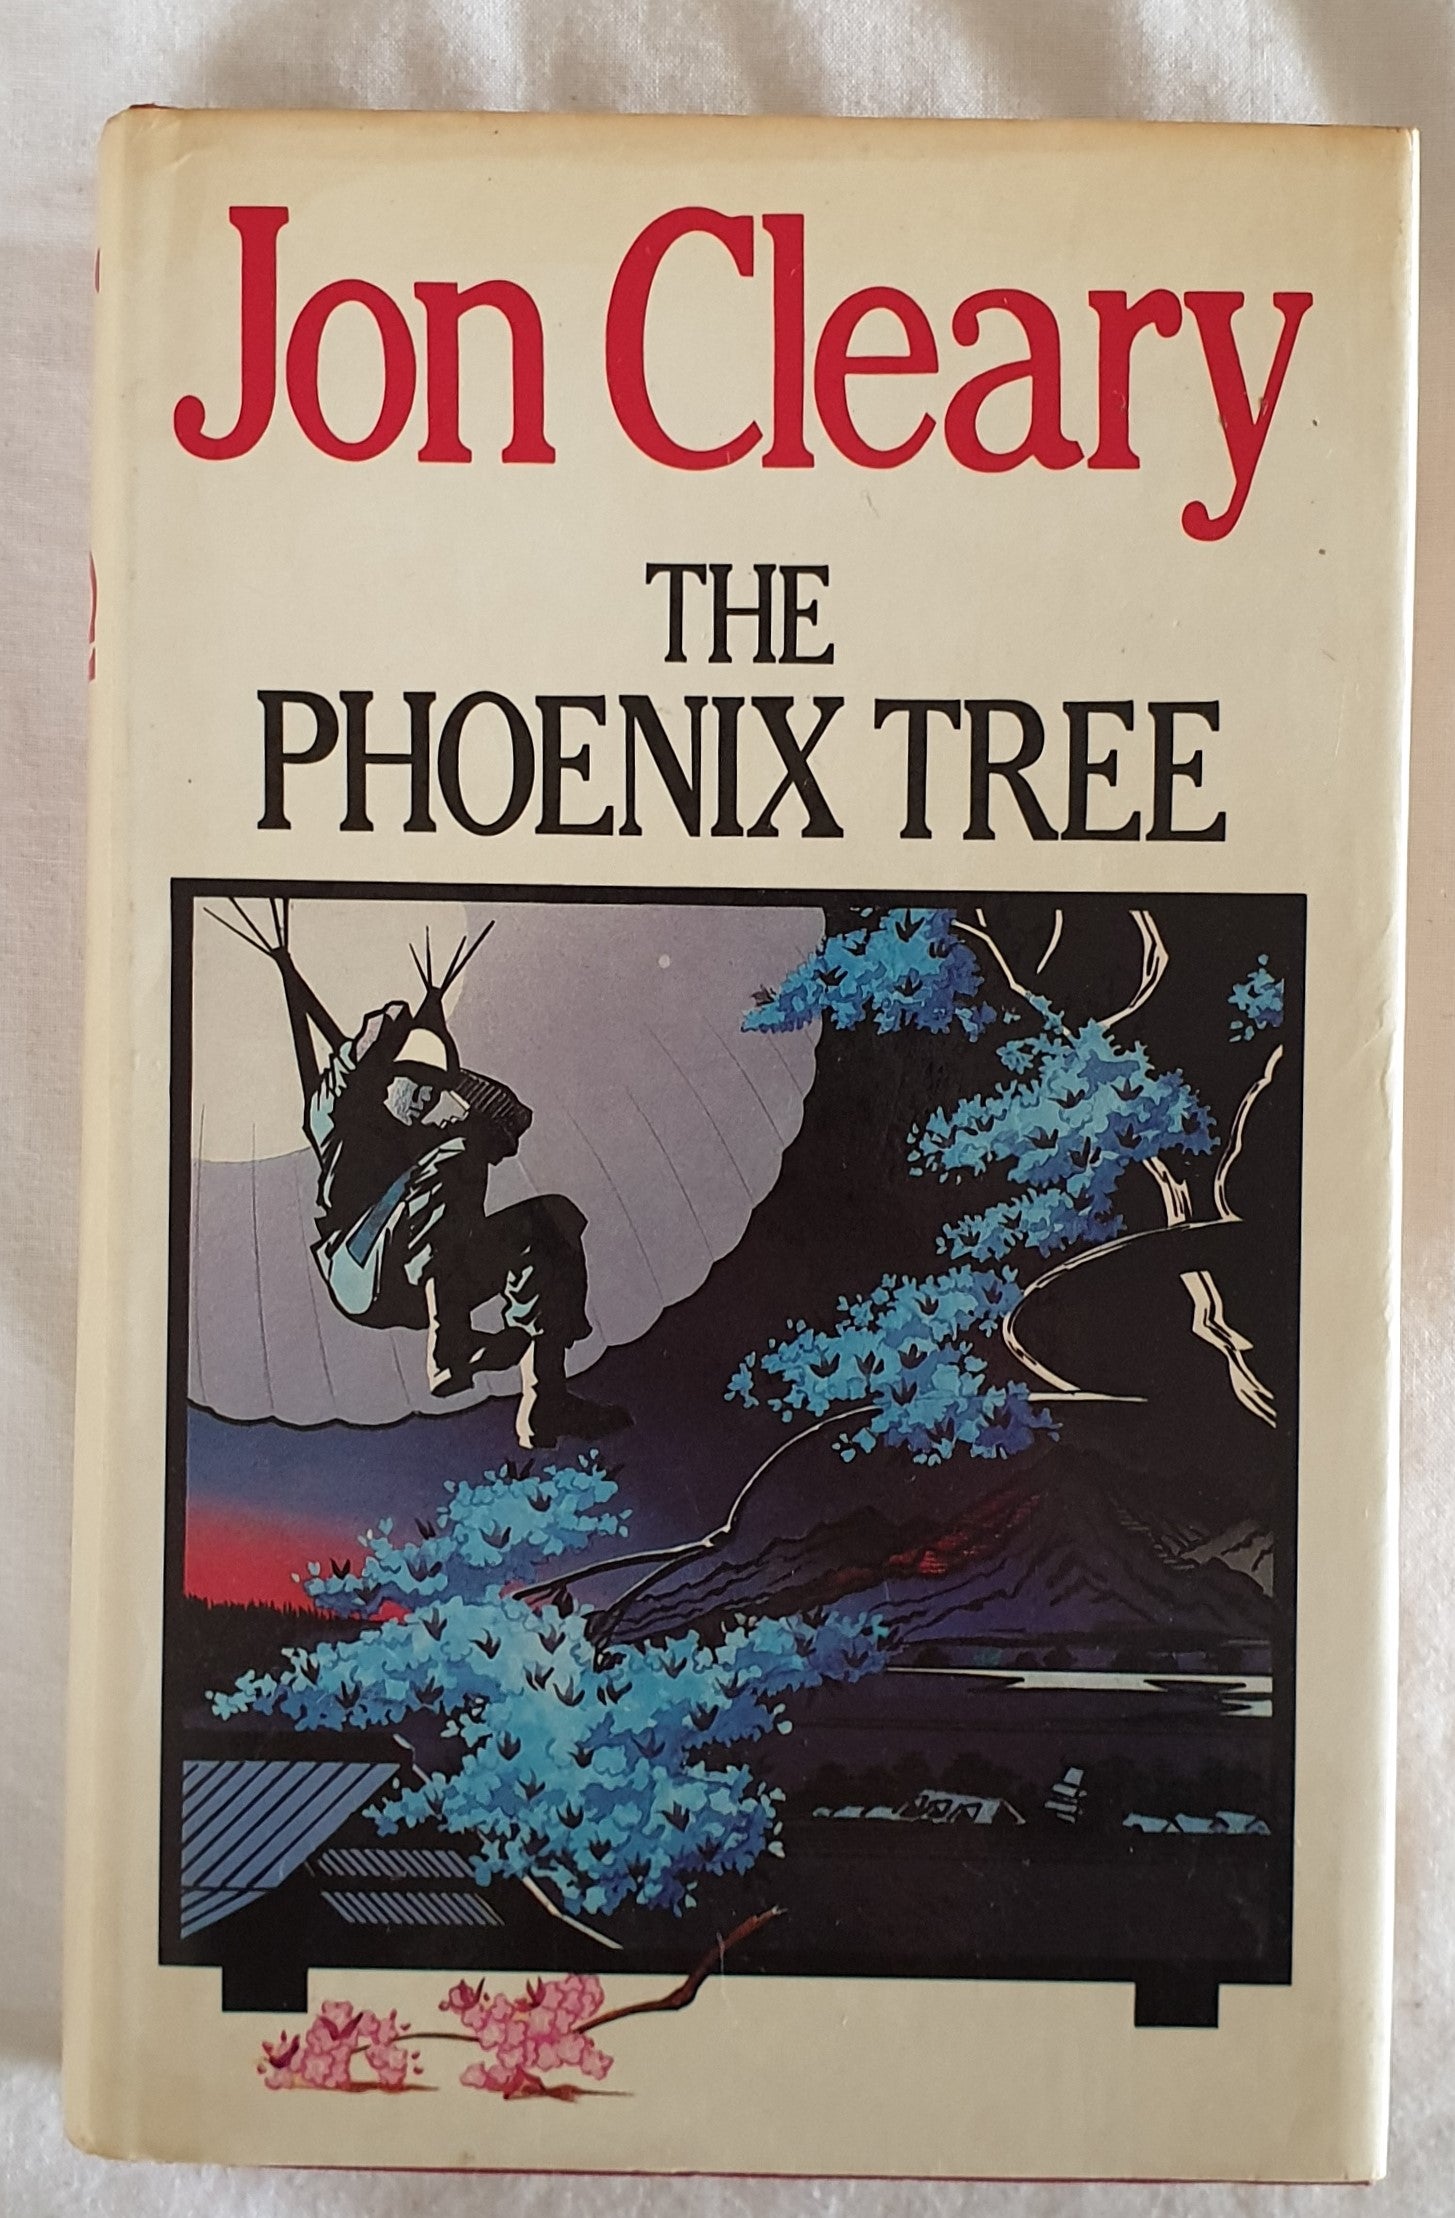 The Phoenix Tree by Jon Cleary